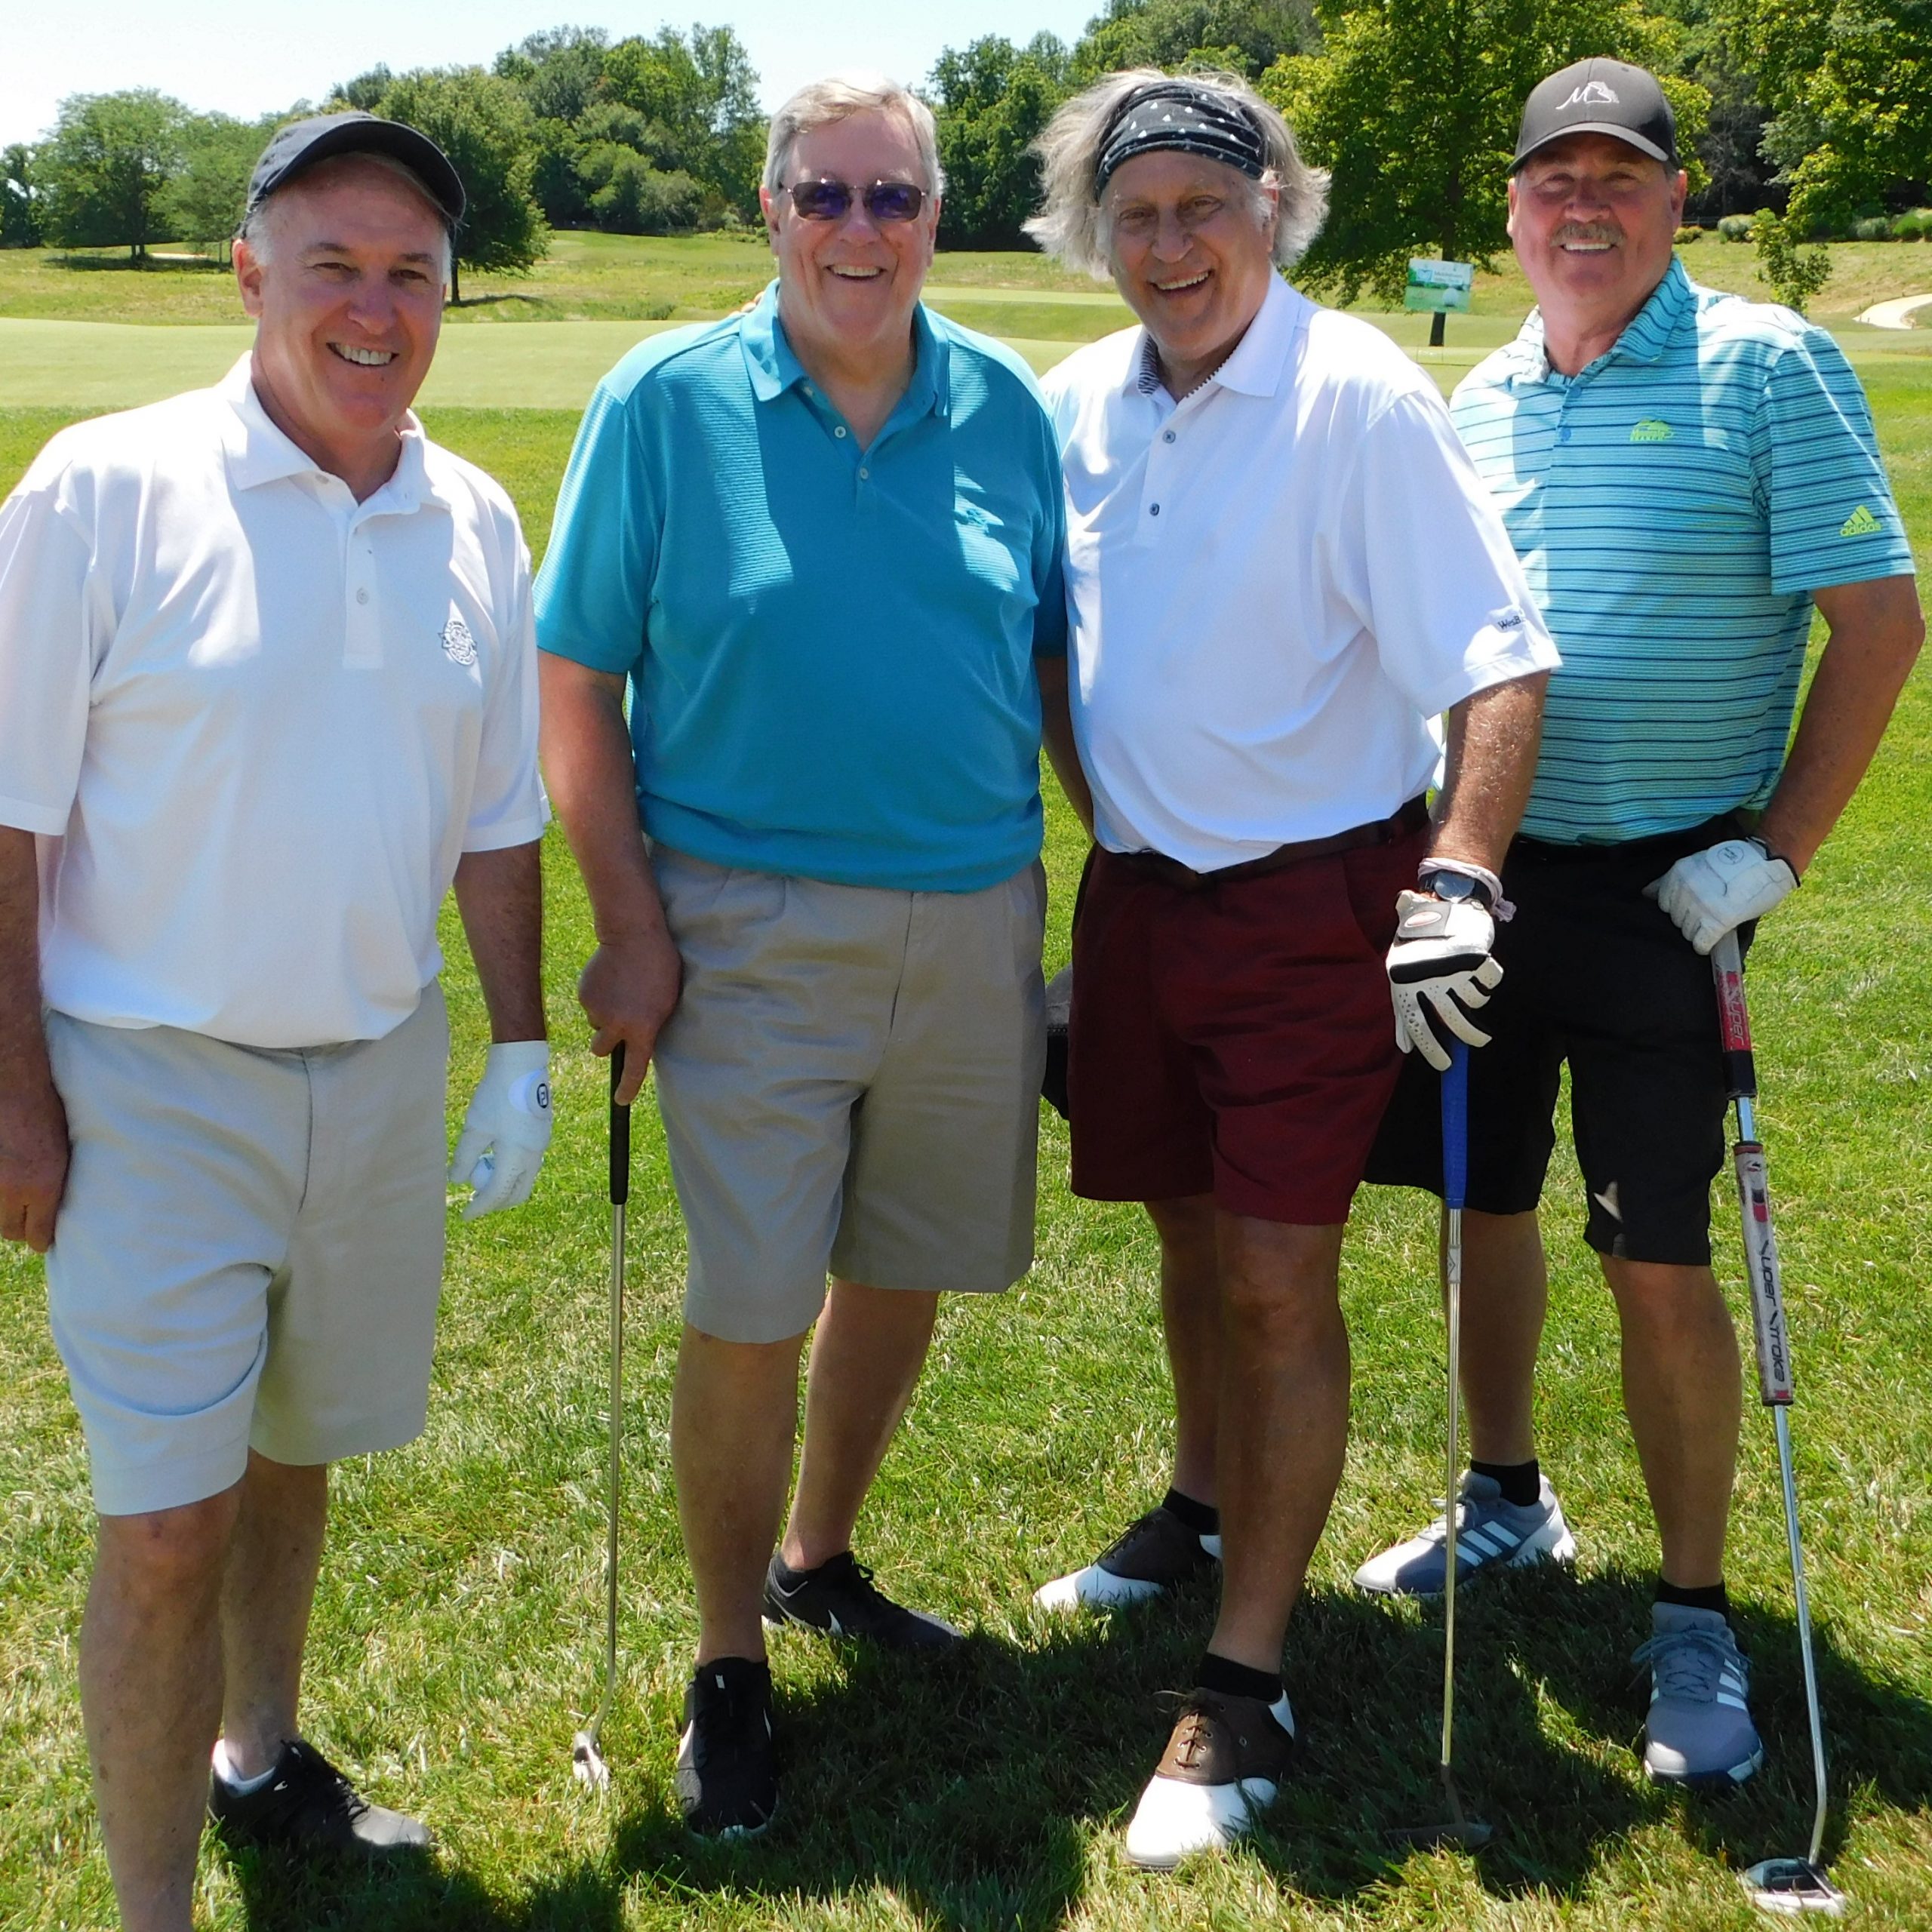 The Arc of Washington County Golf Tournament